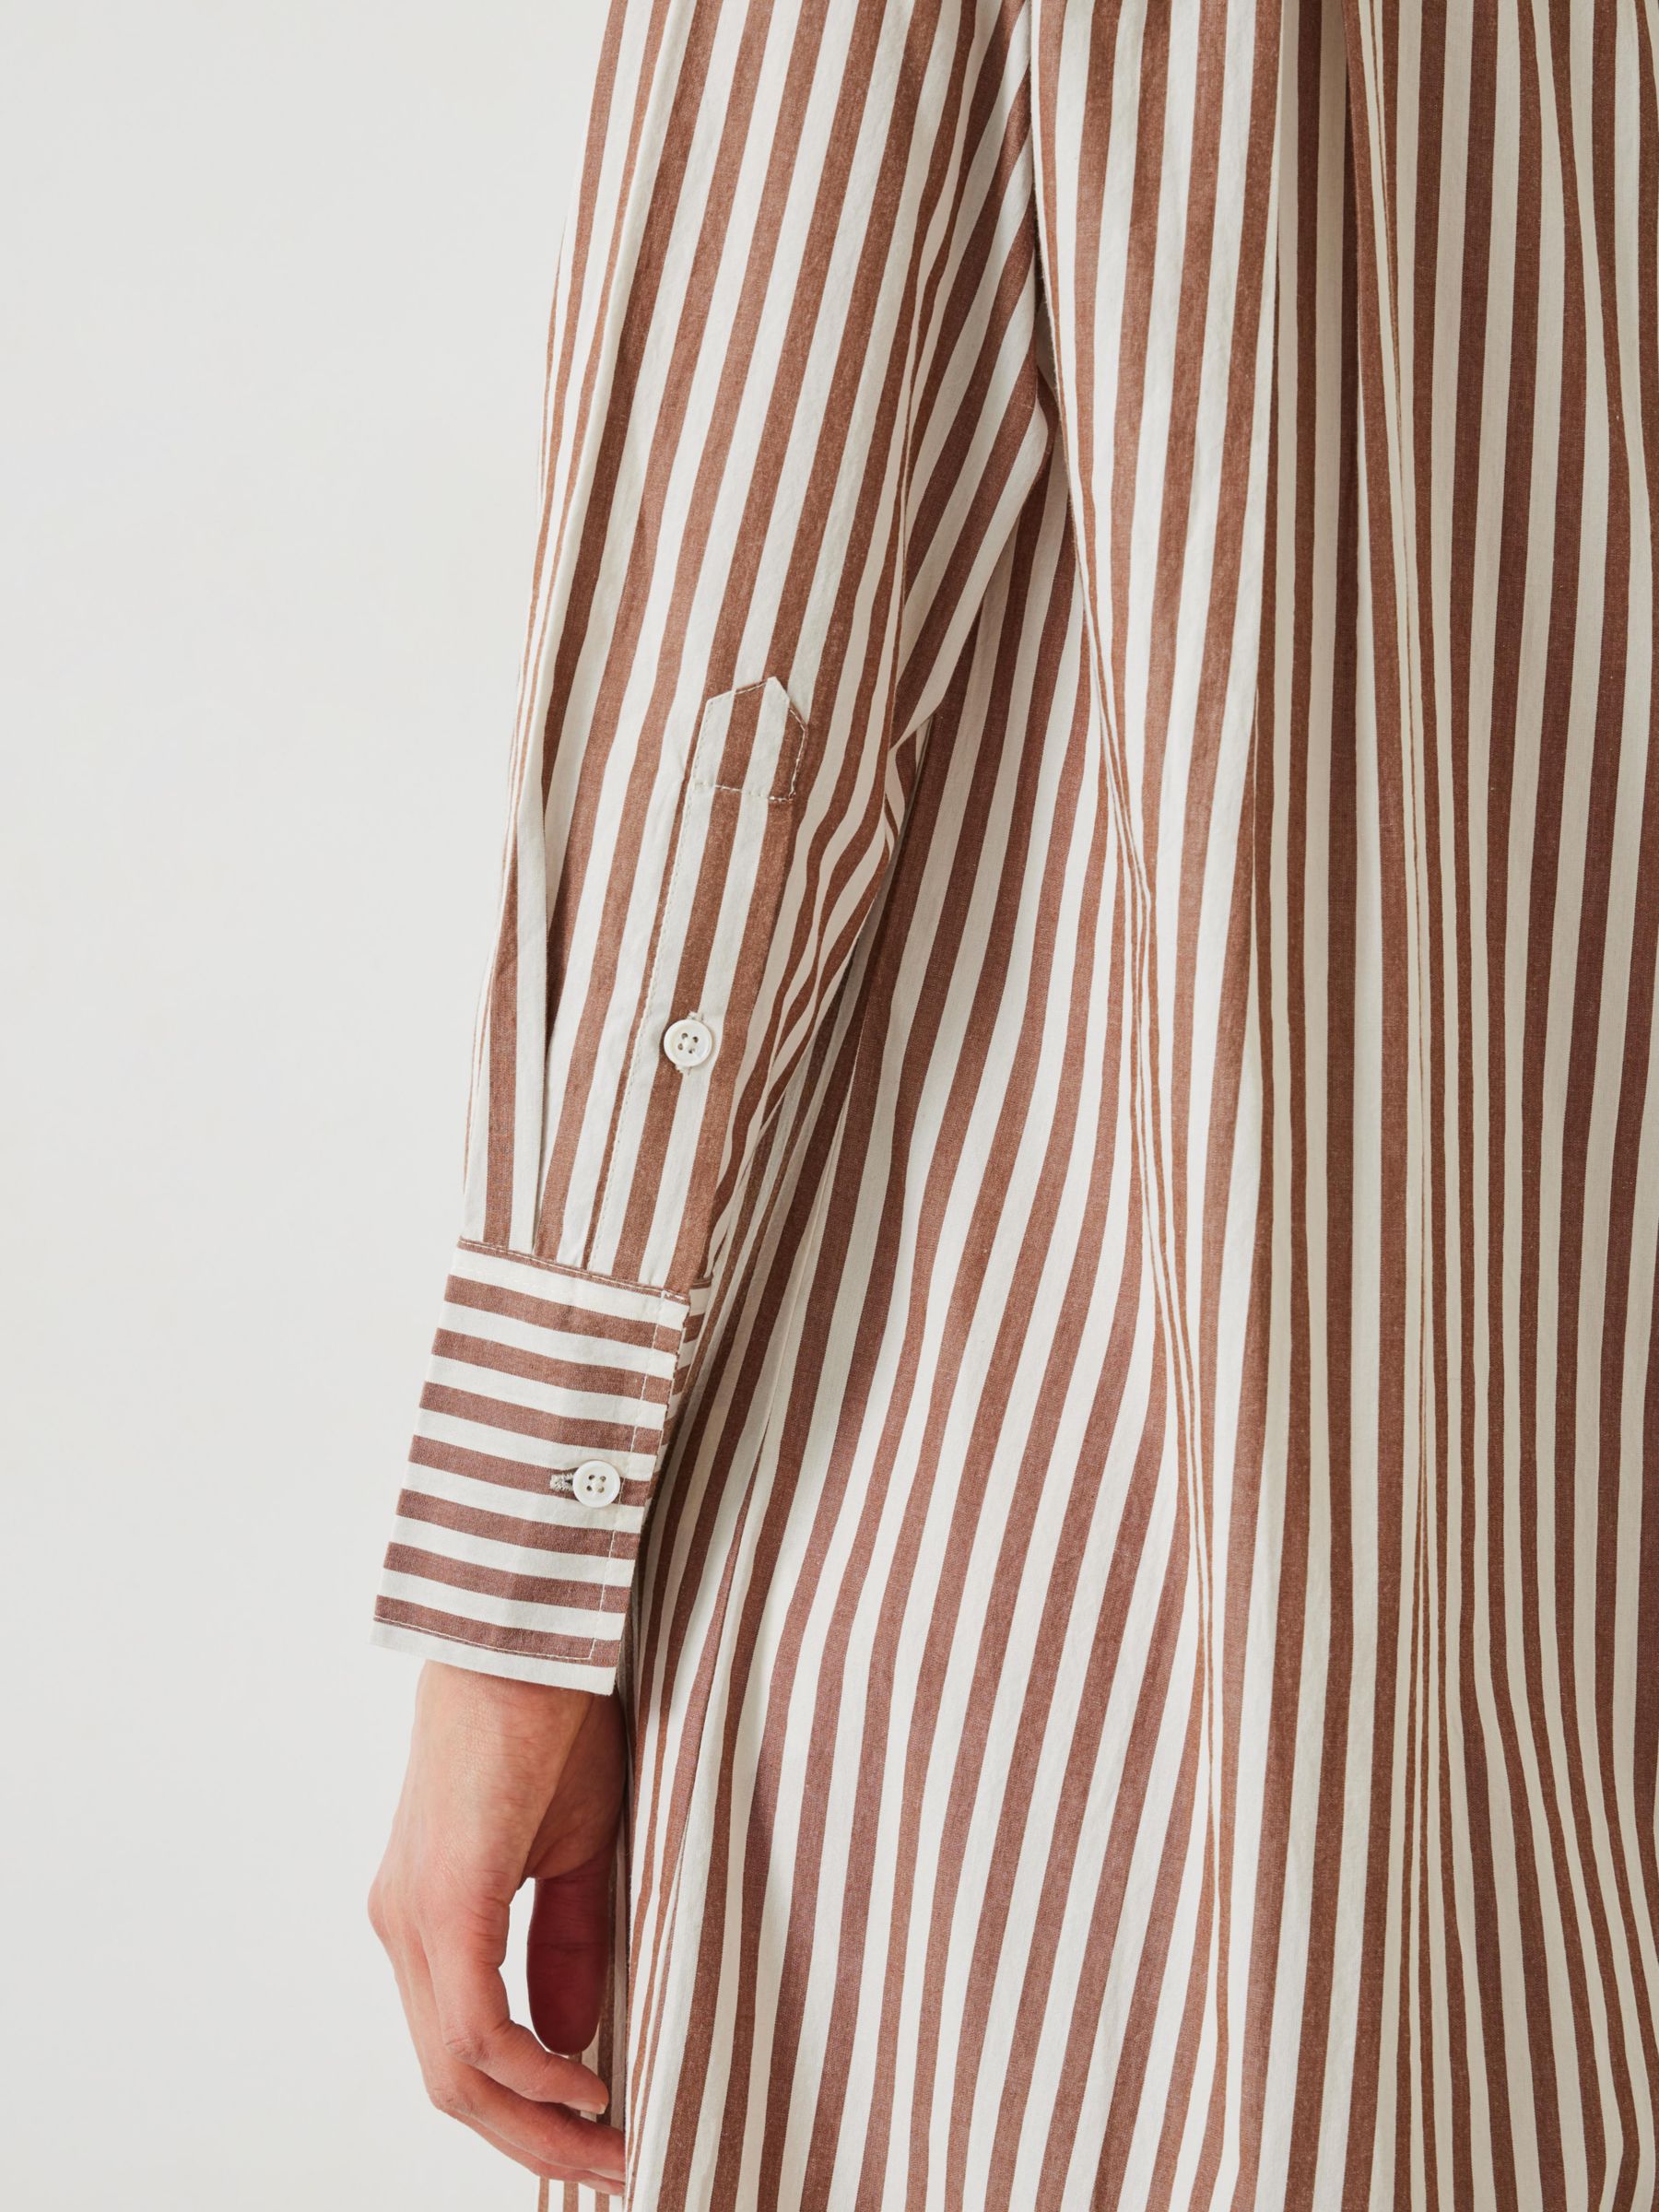 HUSH Sahra Striped Shirt Dress, Brown/White, 8